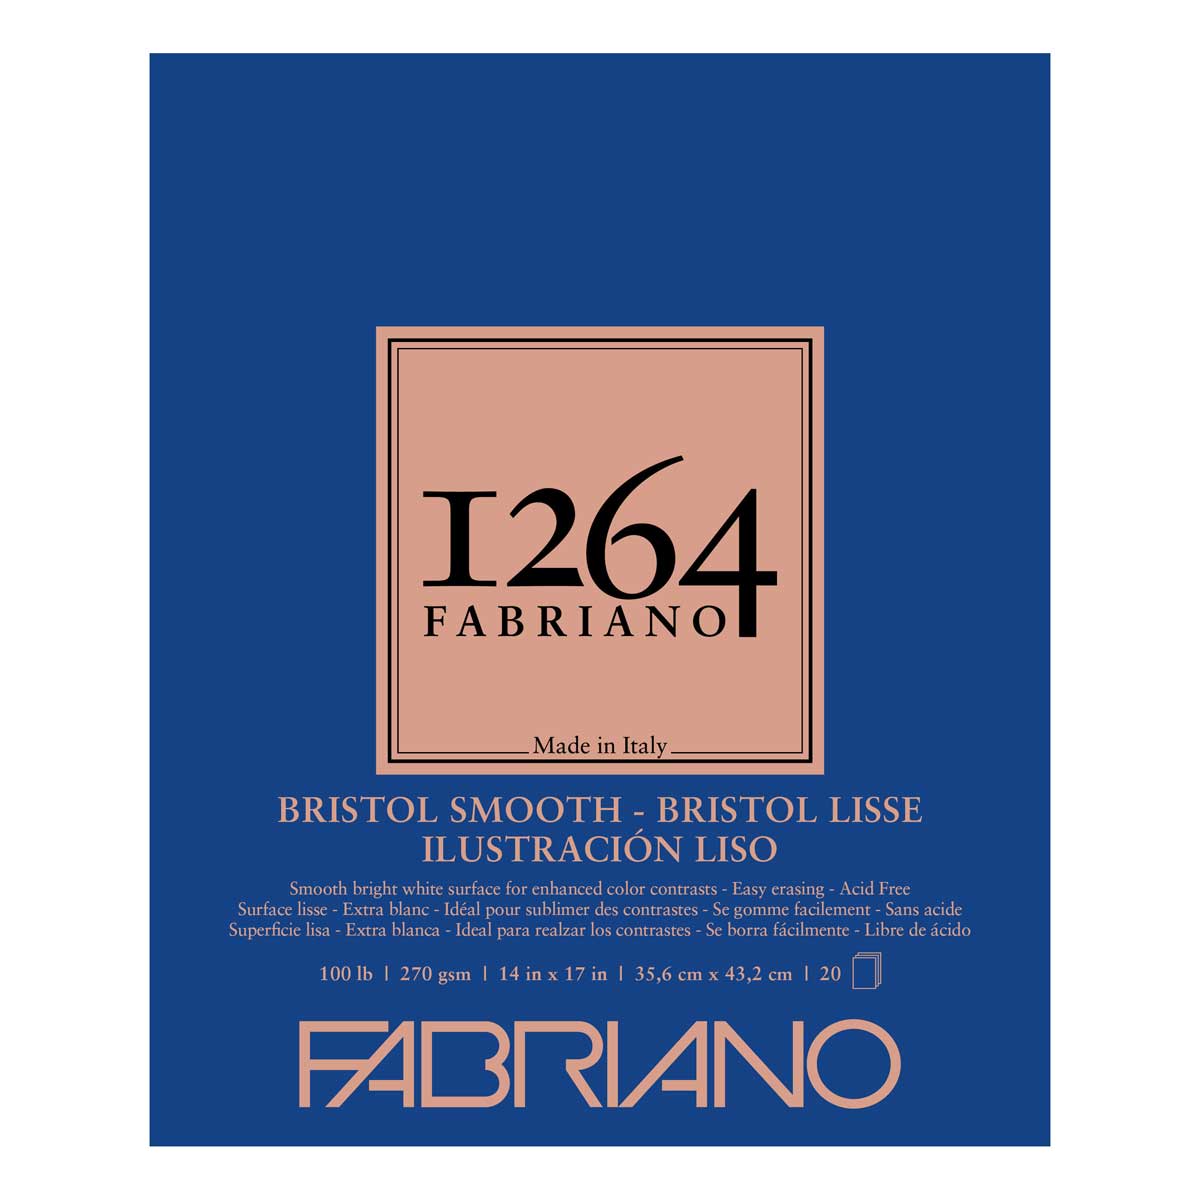 Fabriano 1264 Bristol Smooth Pad 14